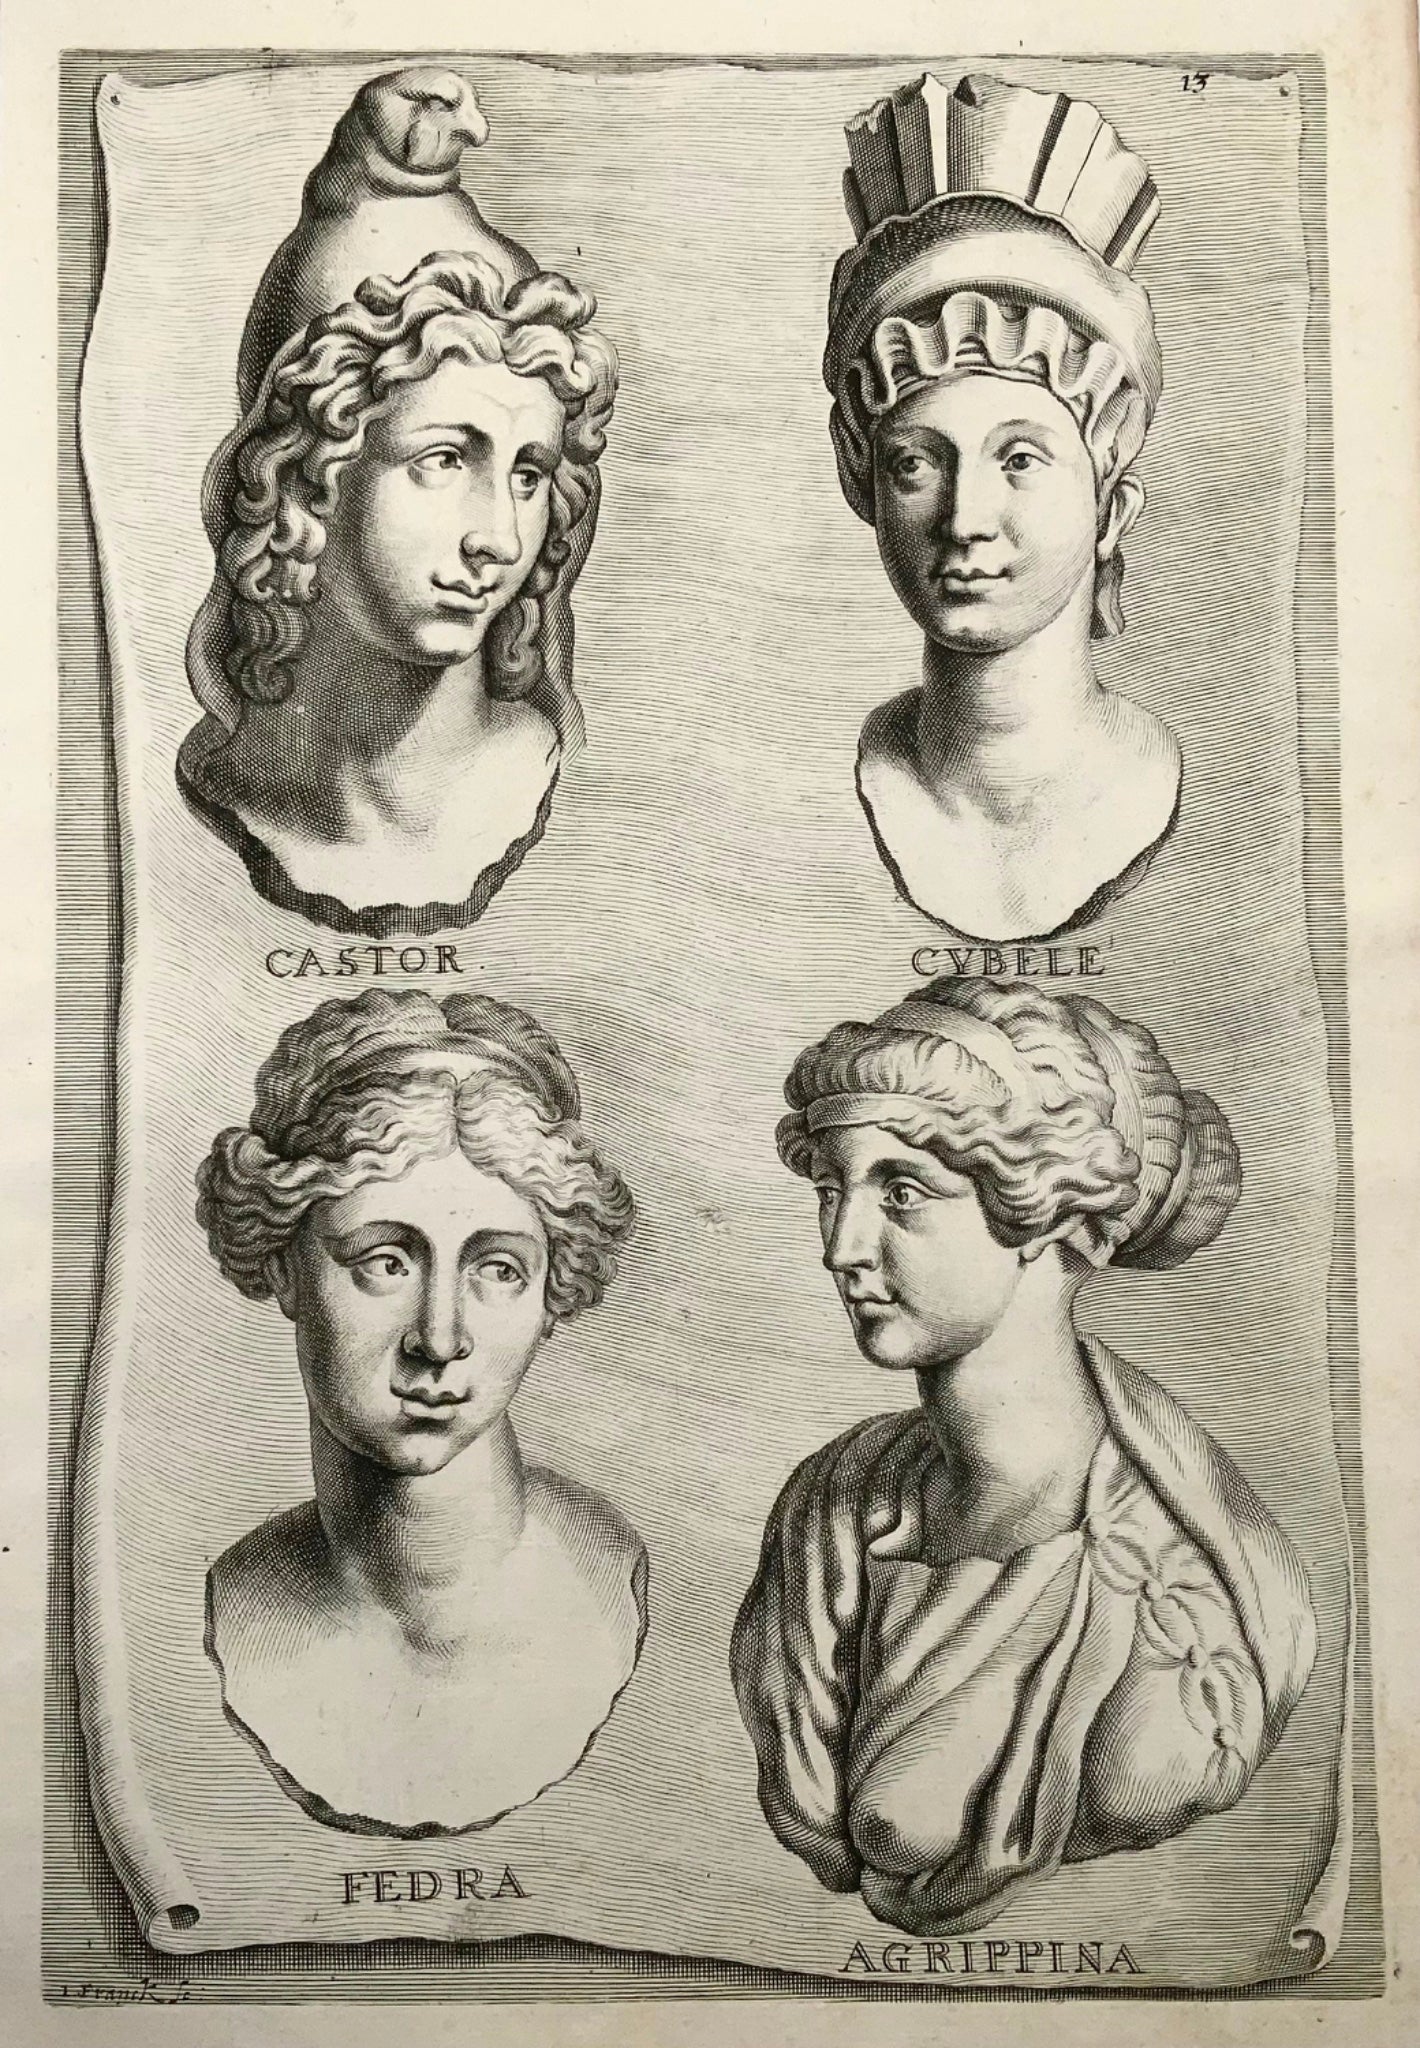 1676 Castore, Cibele, Fedora, Agrippina, Franck secondo Sandrart, incisione su foglio, mitologia 